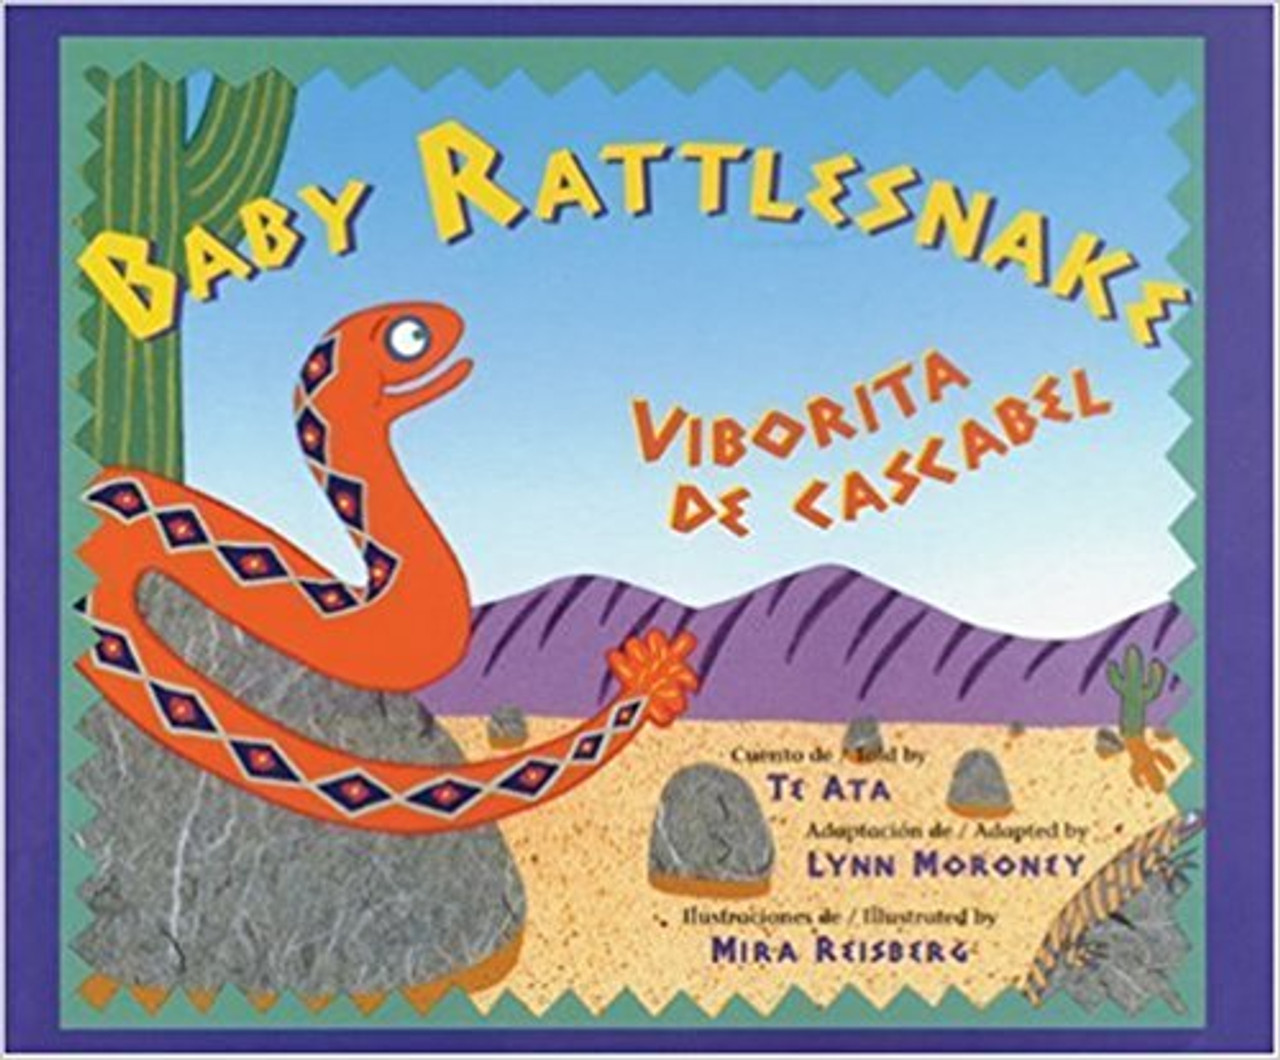 Viborita de Cascabel/Baby Rattlesnake by Te Ata